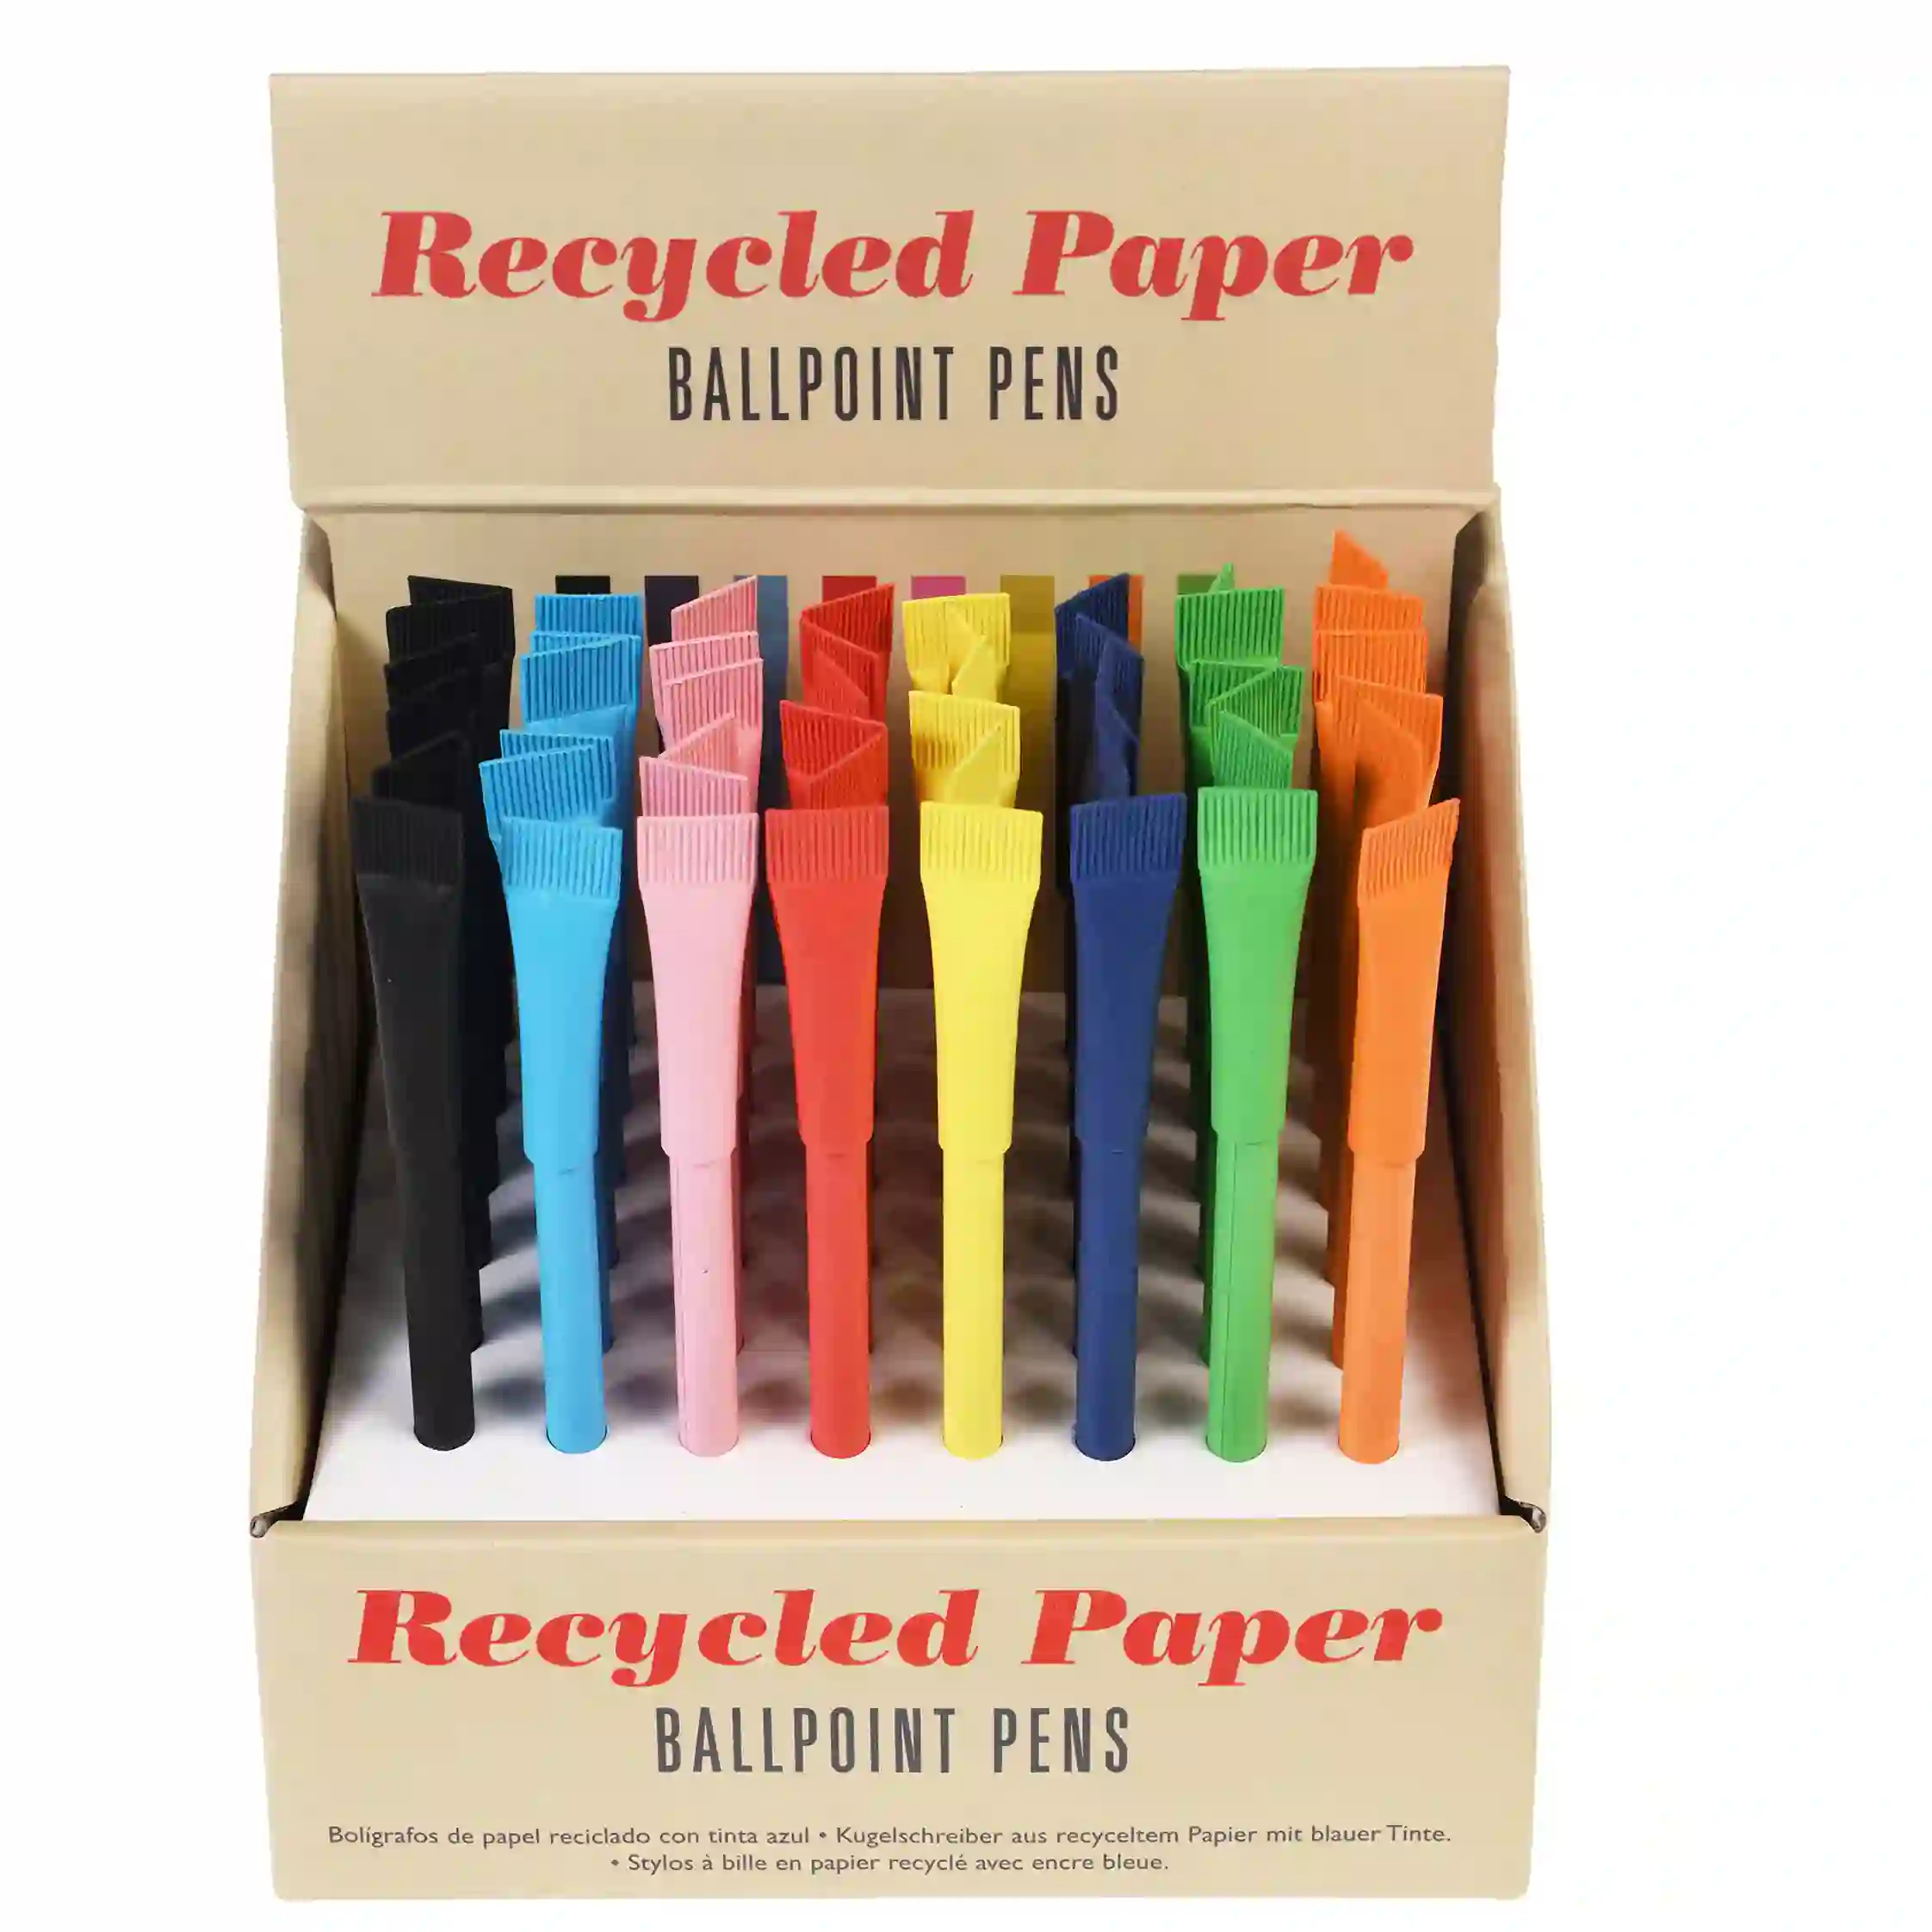 stylo en papier recyclé de couleurs assorties